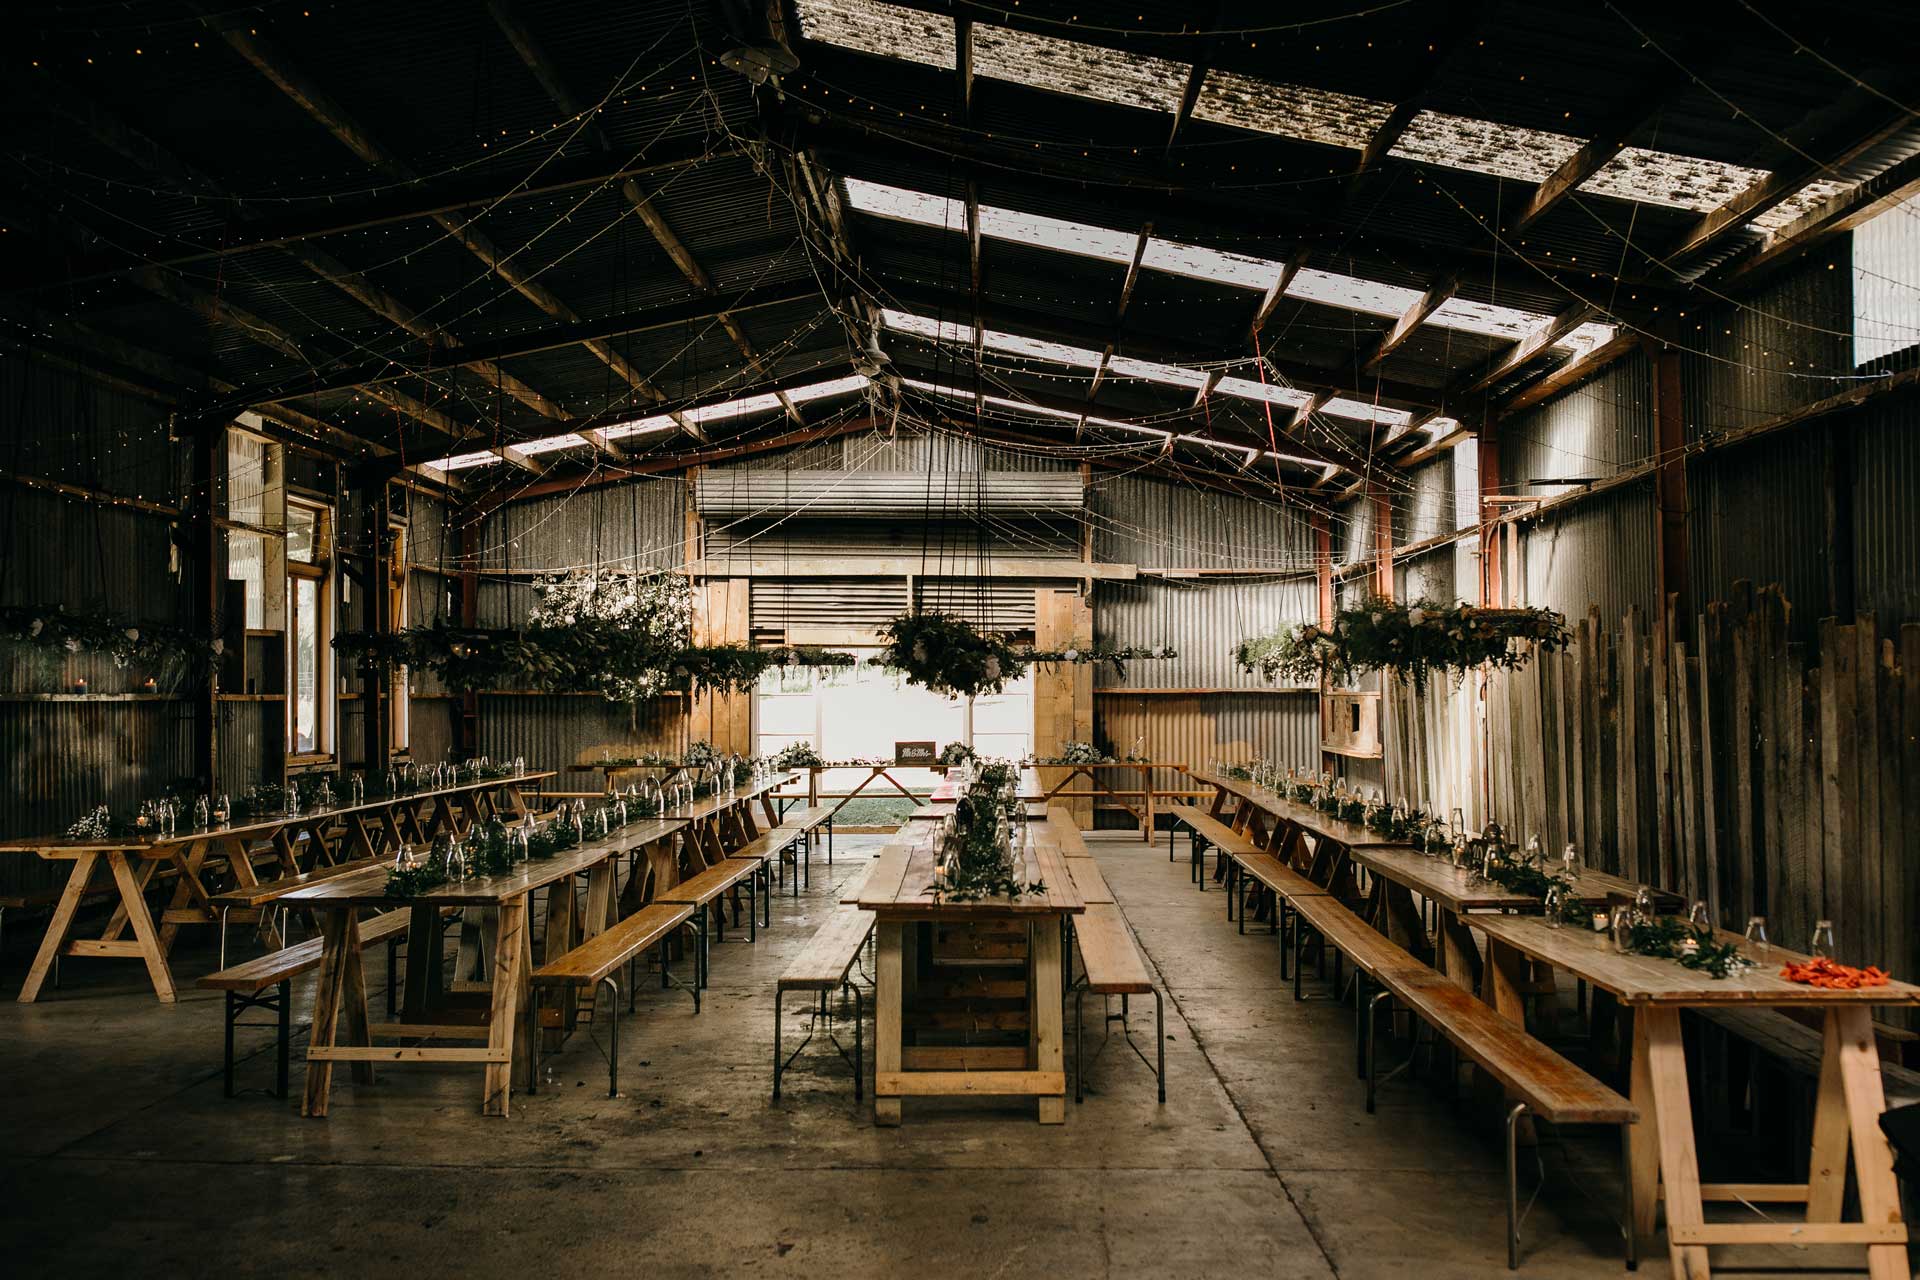 rustic DIY barn wedding reception venue in kumeu auckland new zealand by sarah weber photography